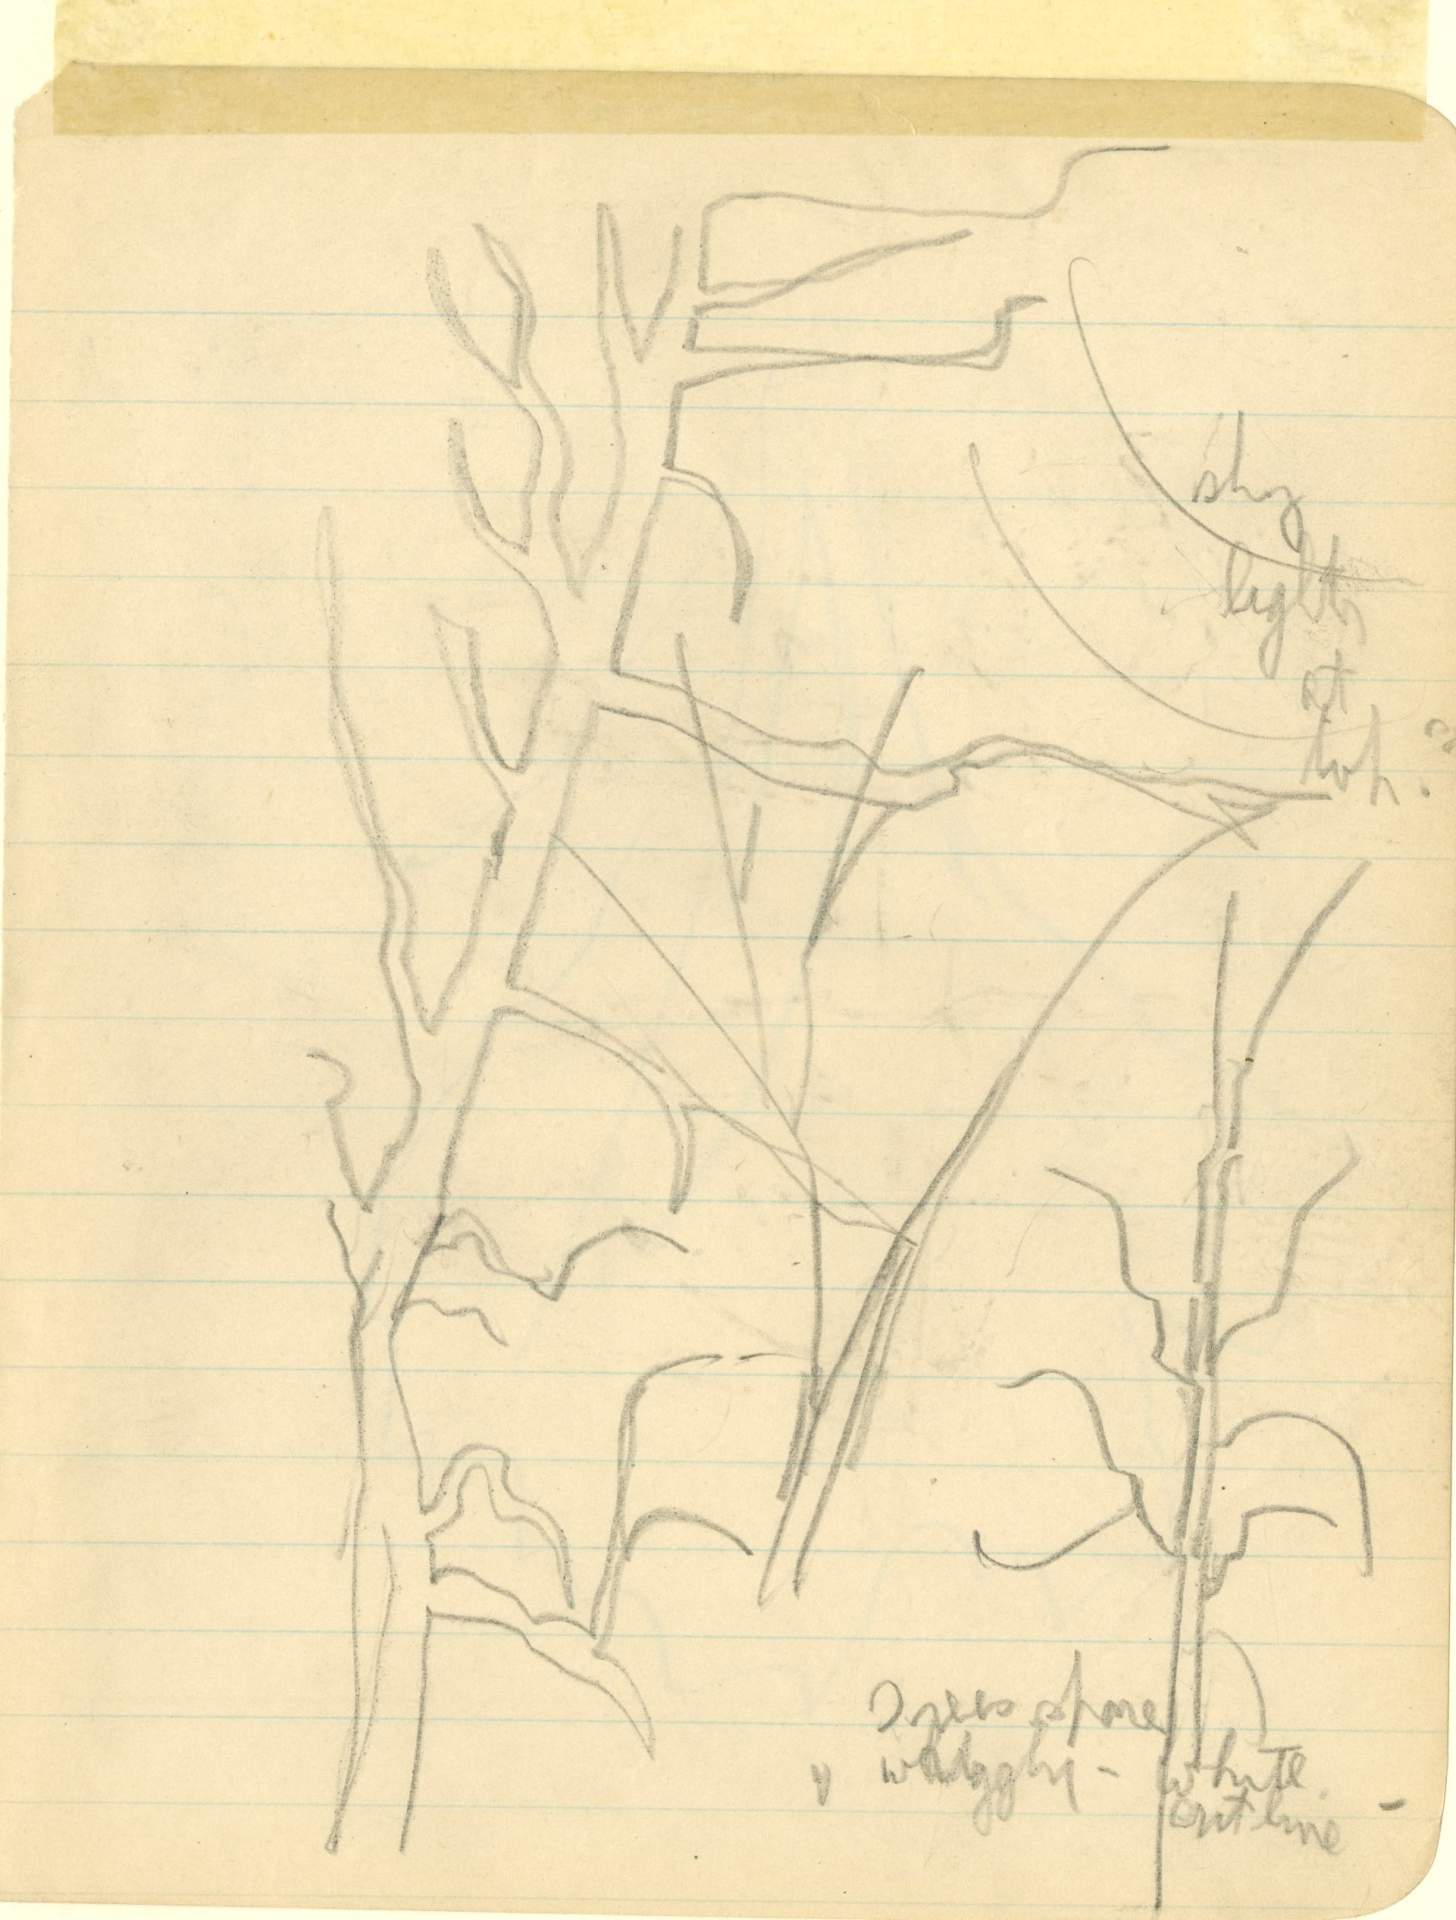 Sketch with description of color around trees